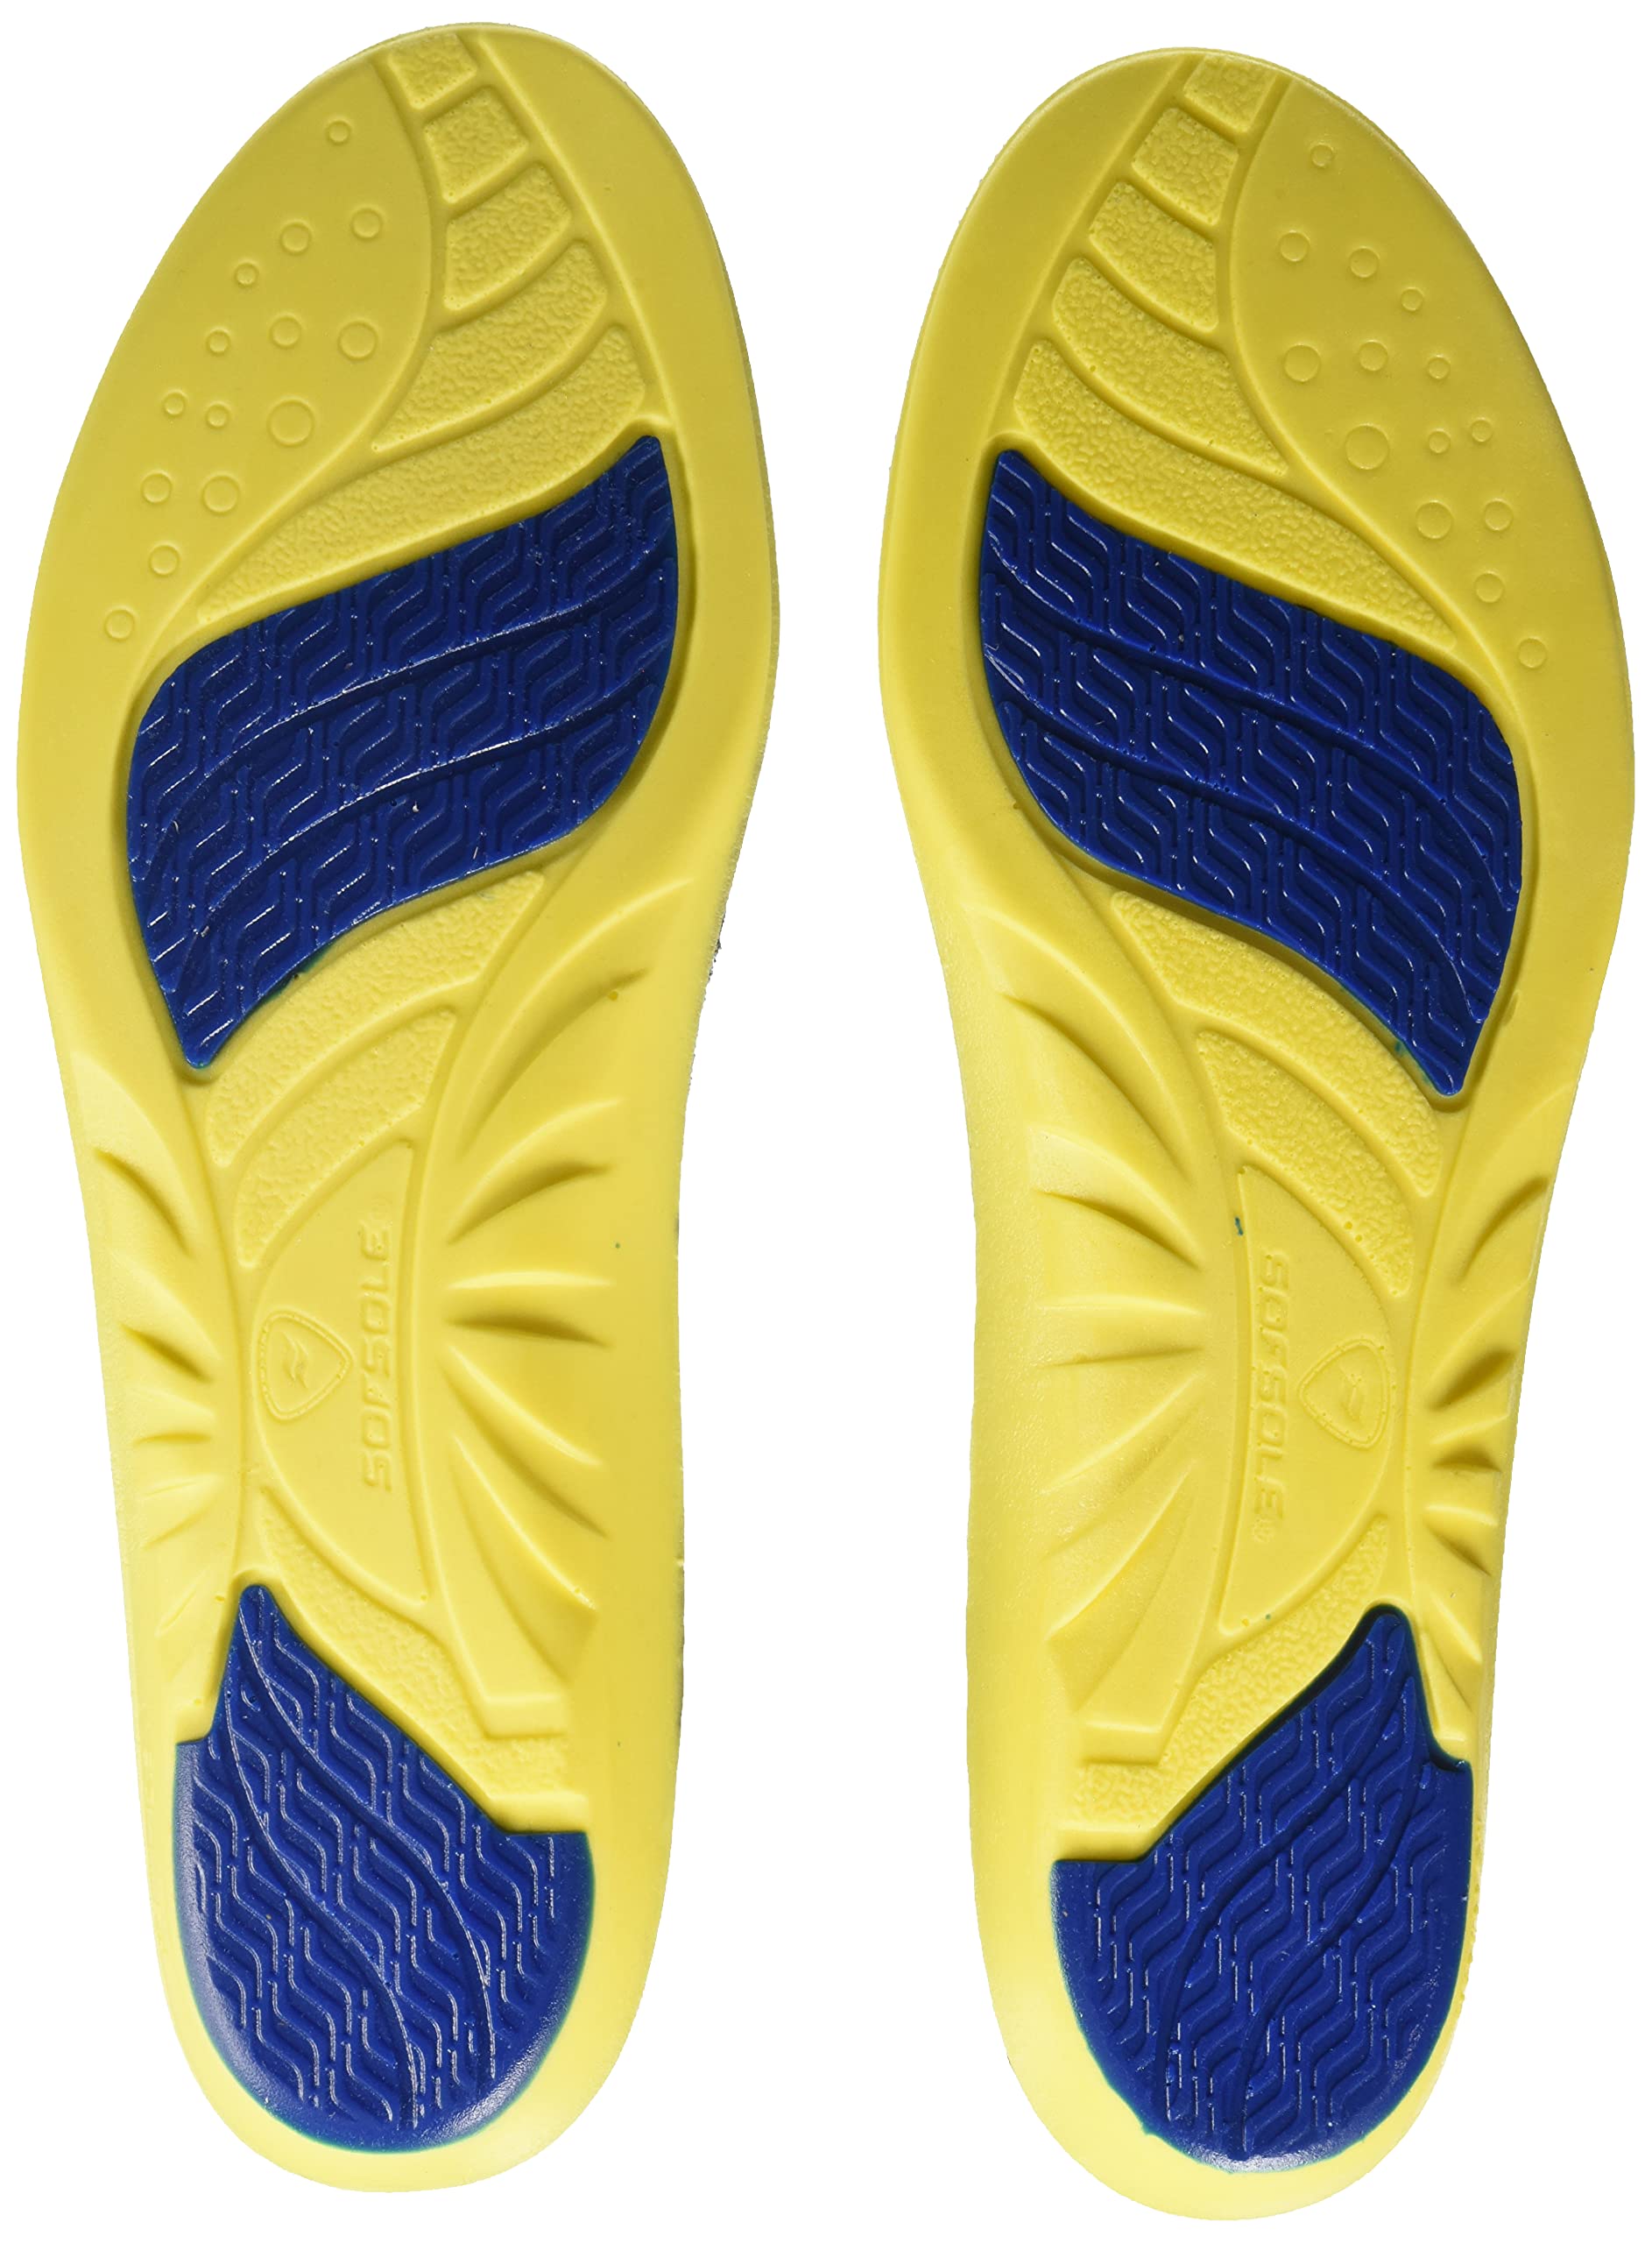 Sof Sole Insoles Men's ATHLETE Performance Full-Length Gel Shoe Insert